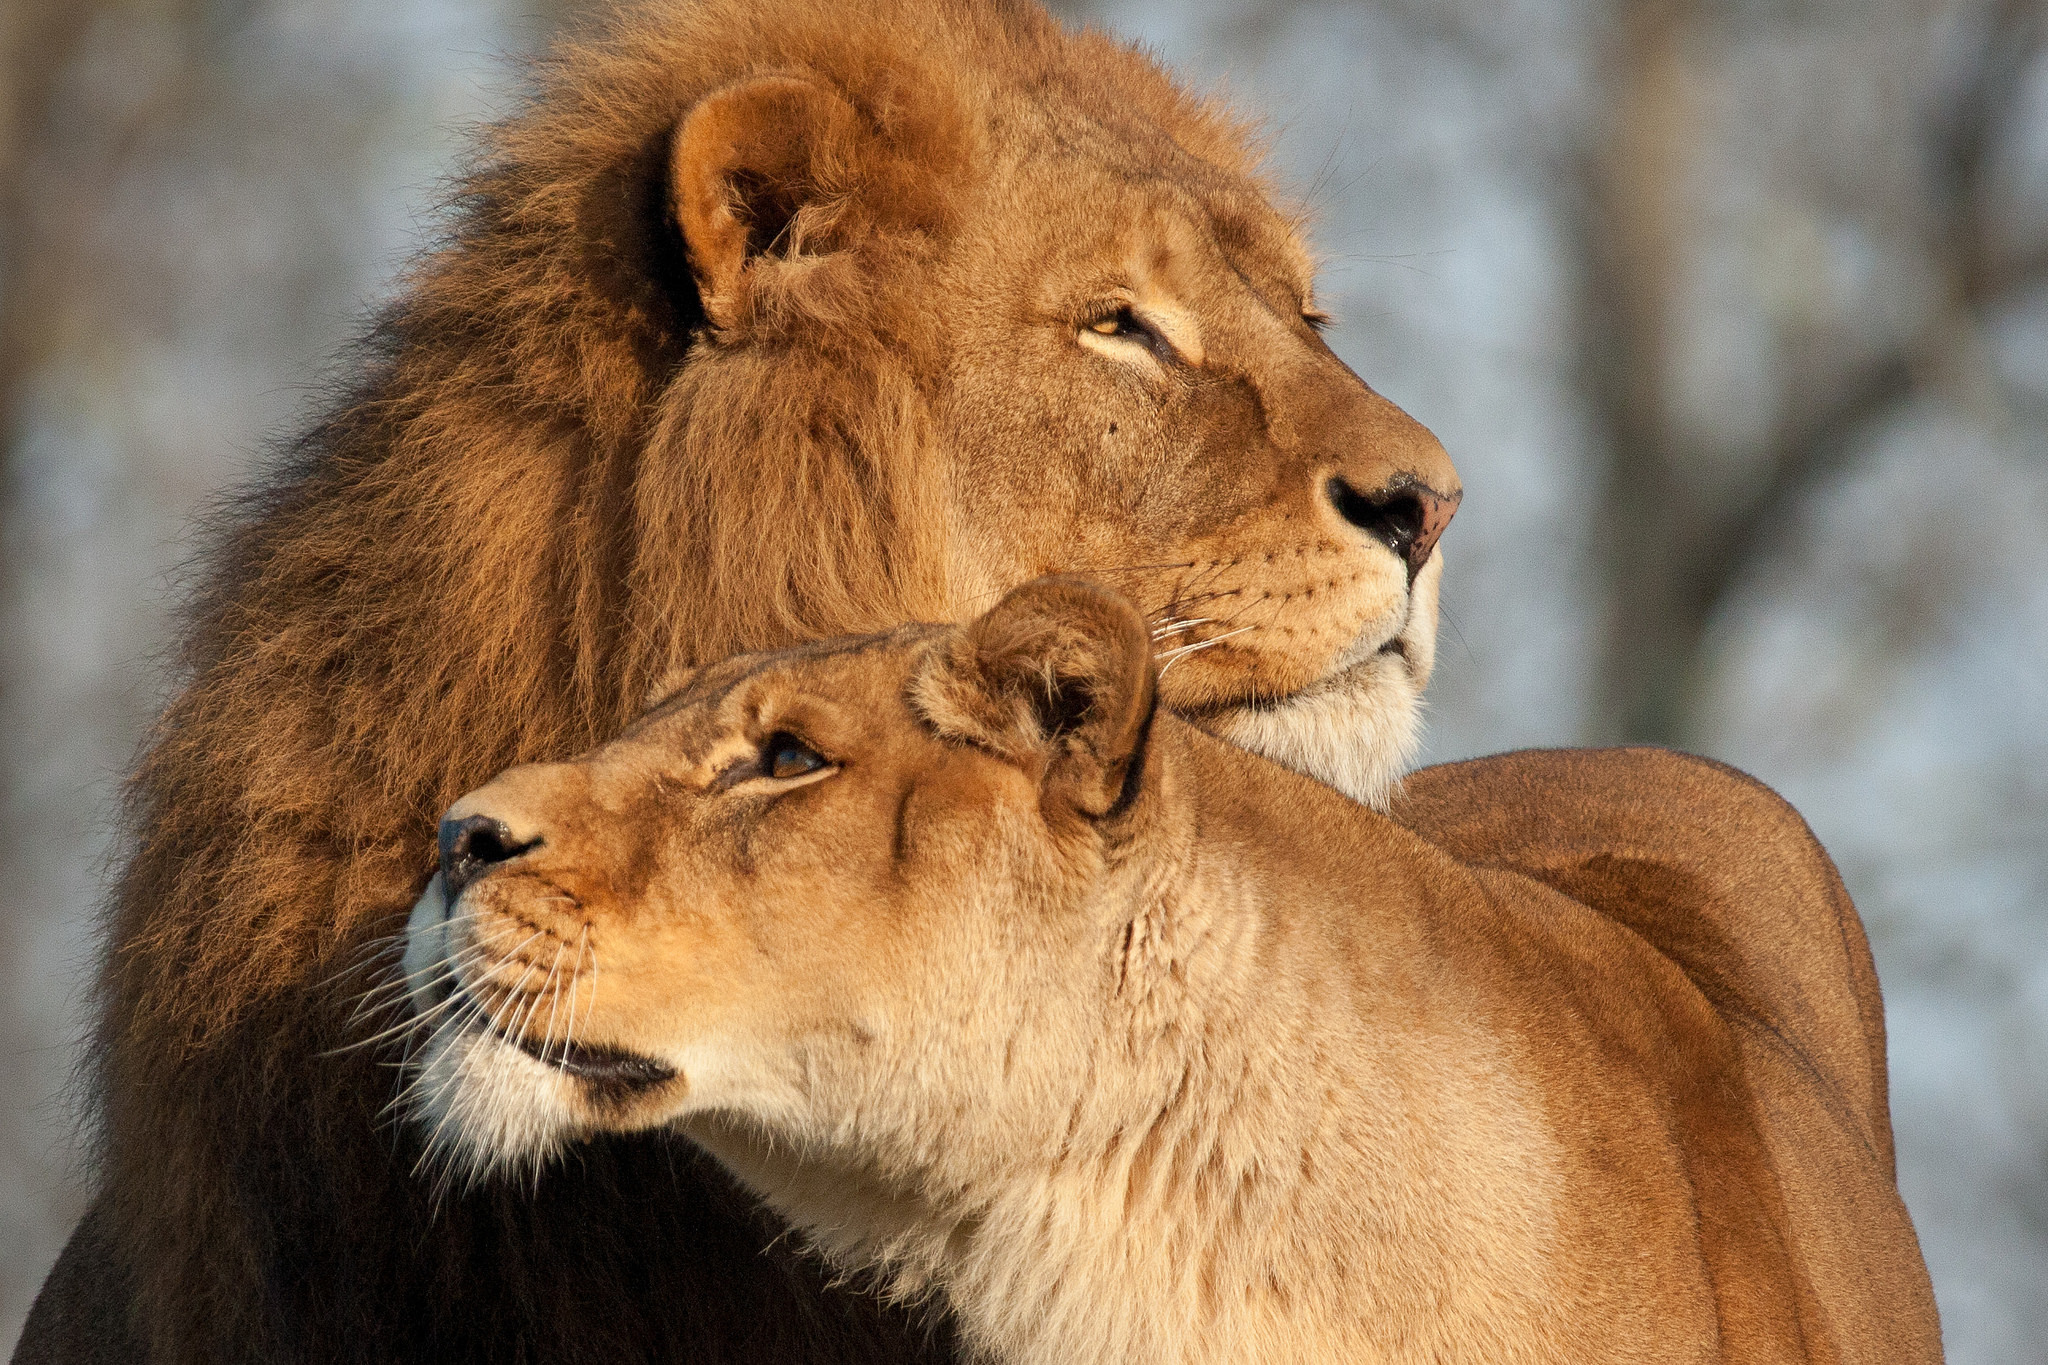 Wallpaper | A Lion & Lioness Seen From Above | Art Of Safari